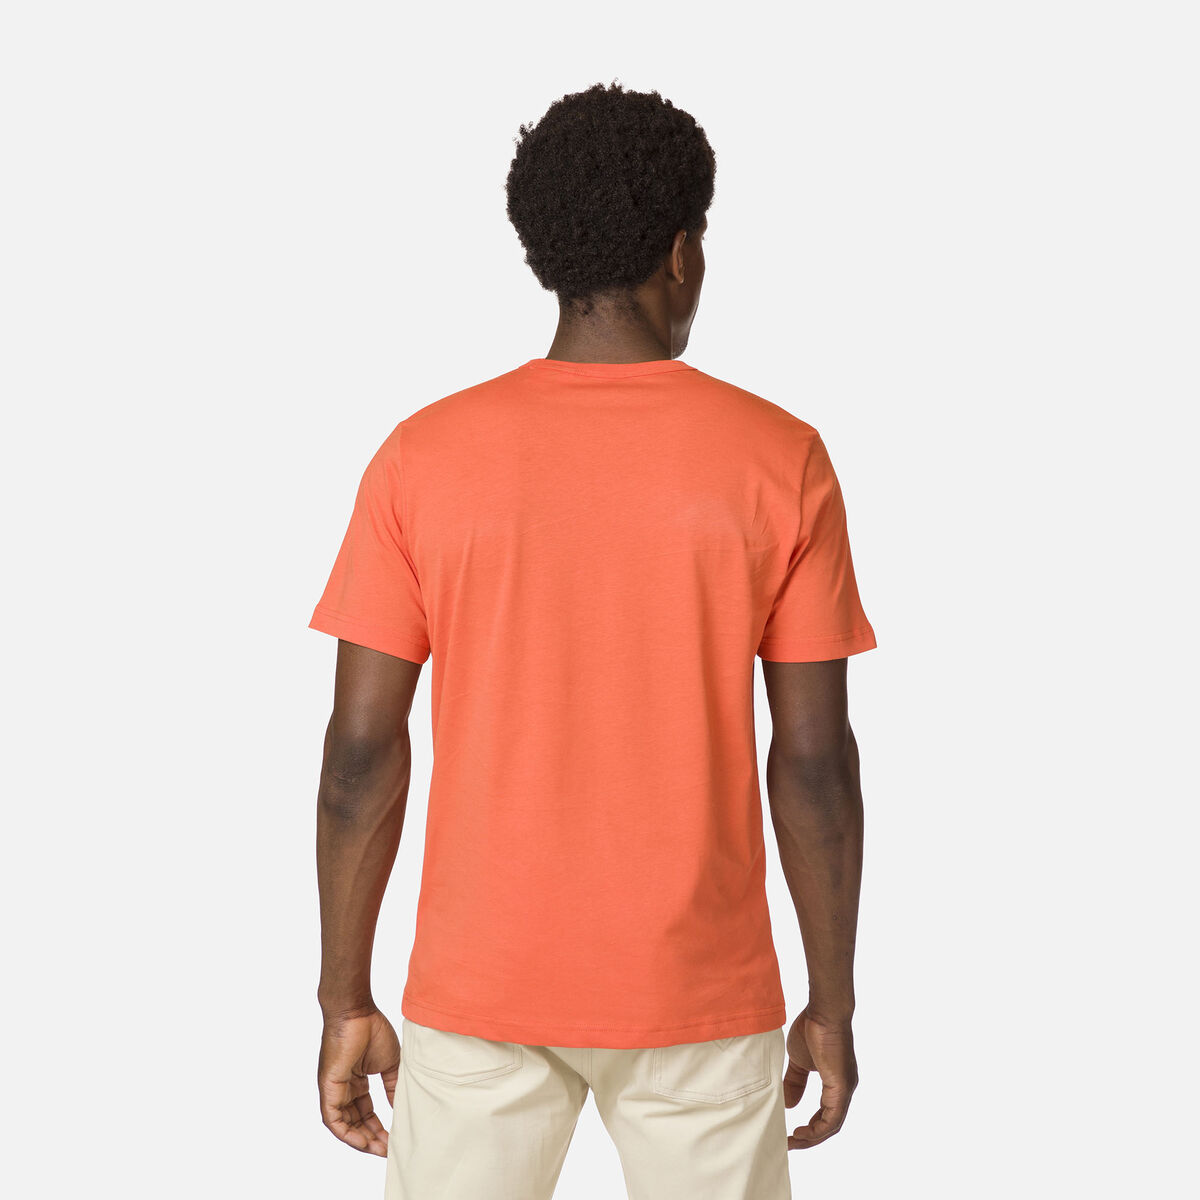 Rossignol Logo Rossignol Herren-T-Shirt Orange